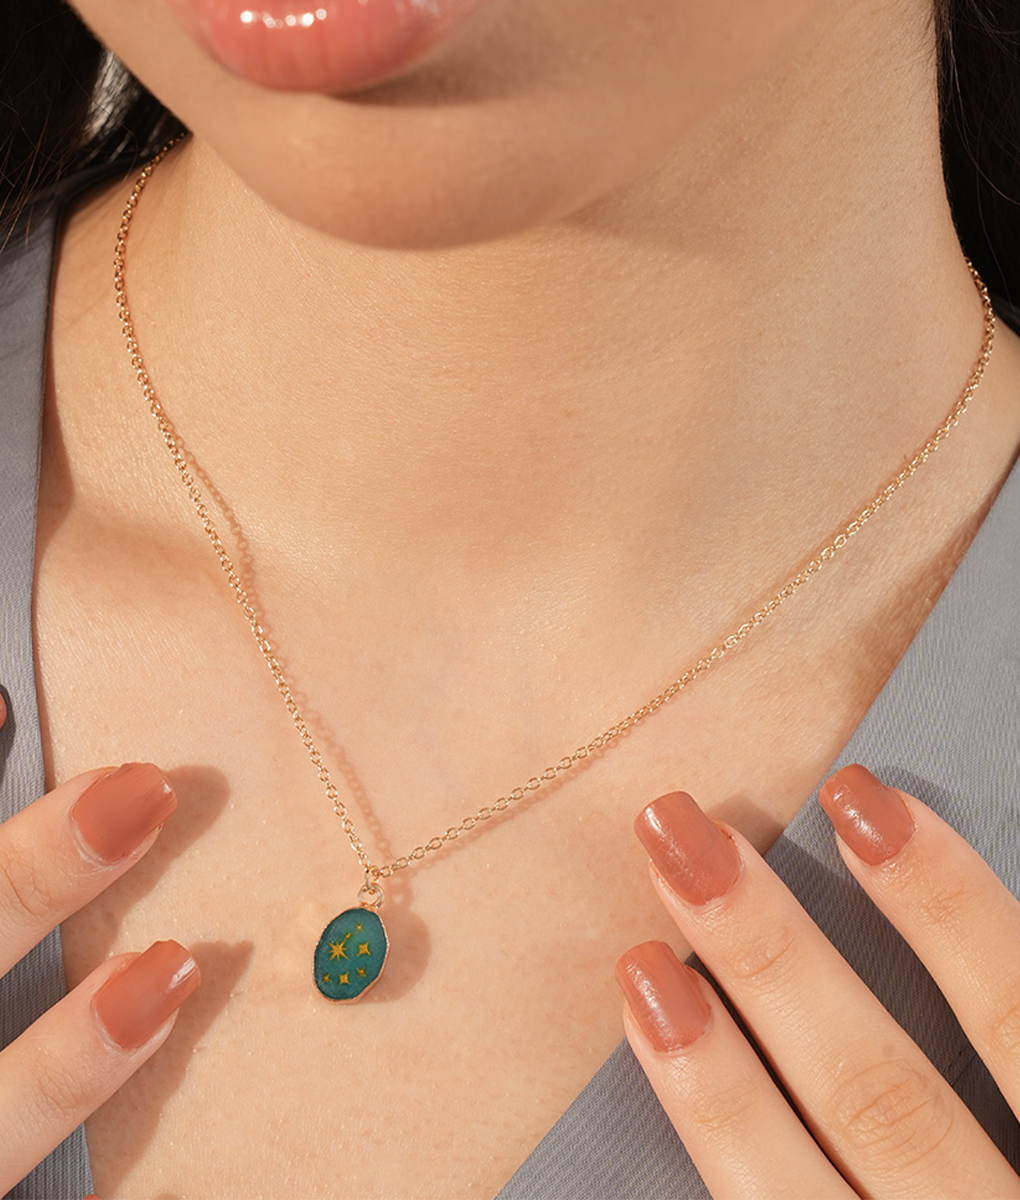 The Jade Sparkle Necklace